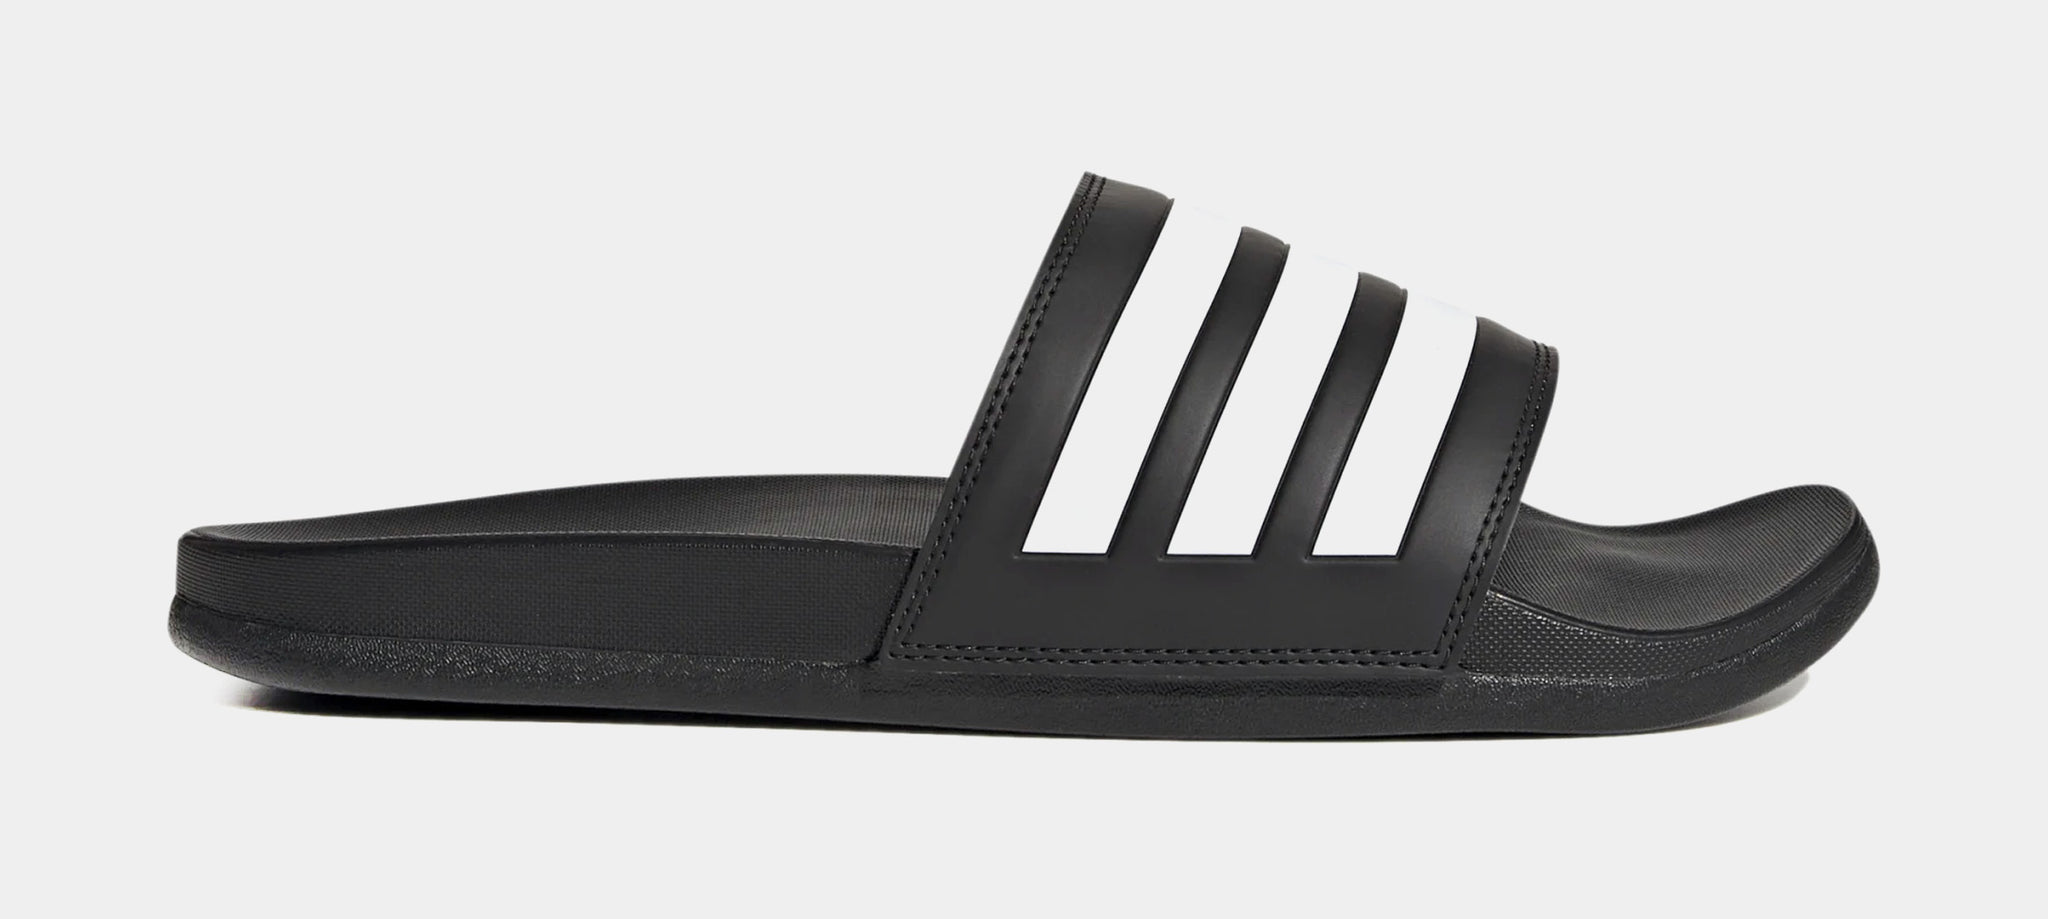 adidas Unisex-Adult Adissage Slides Sandal 11 Women/10 Men Black/White/Black